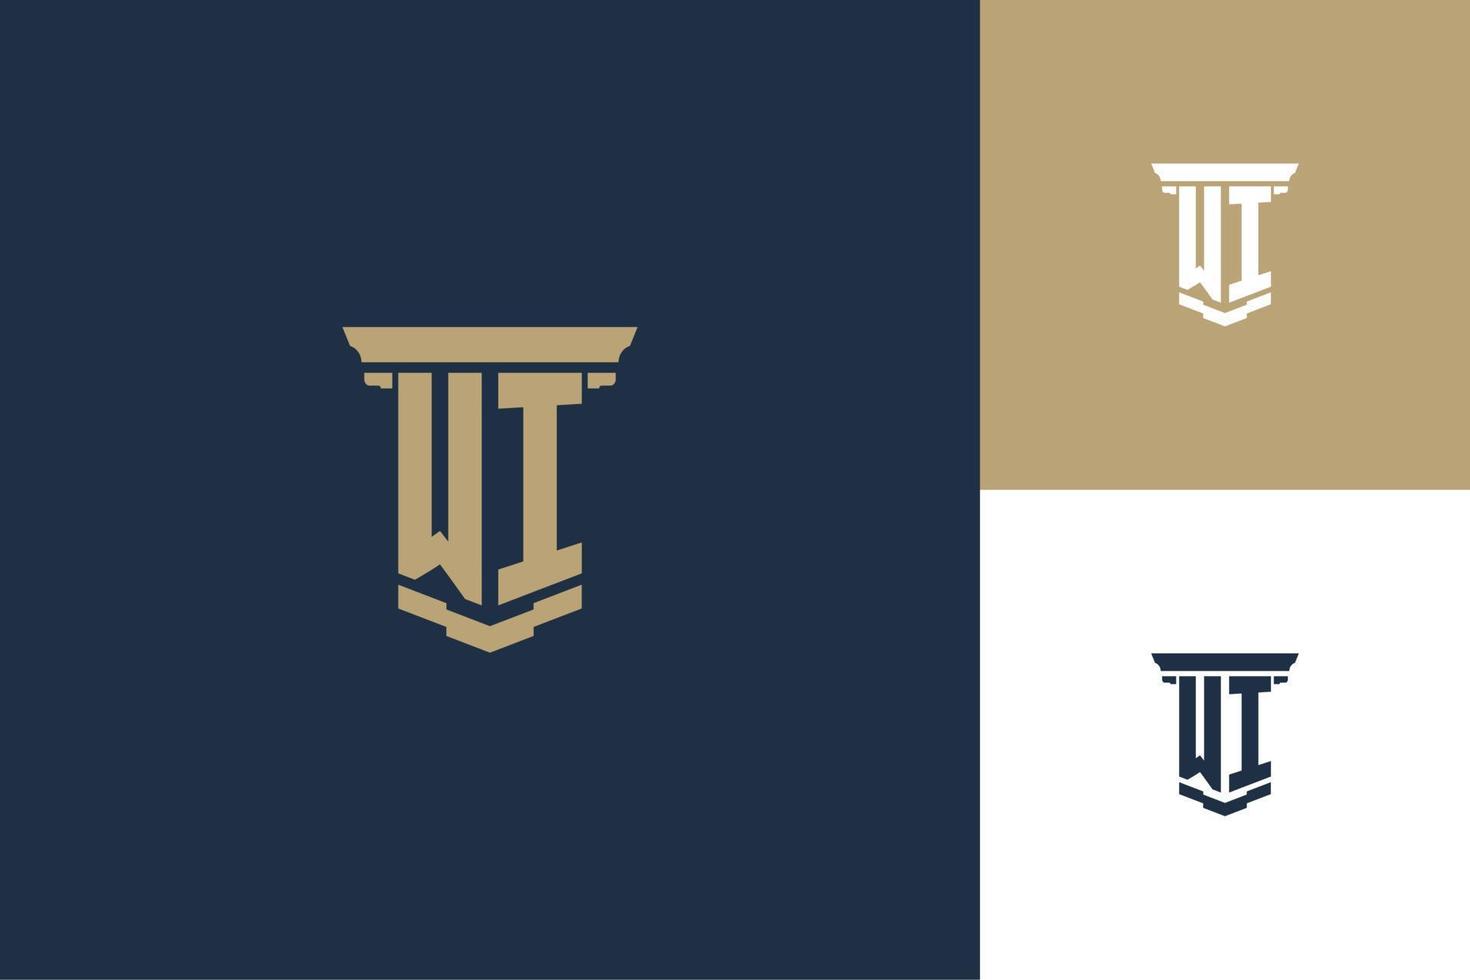 WI monogram initials logo design with pillar icon. Attorney law logo design vector